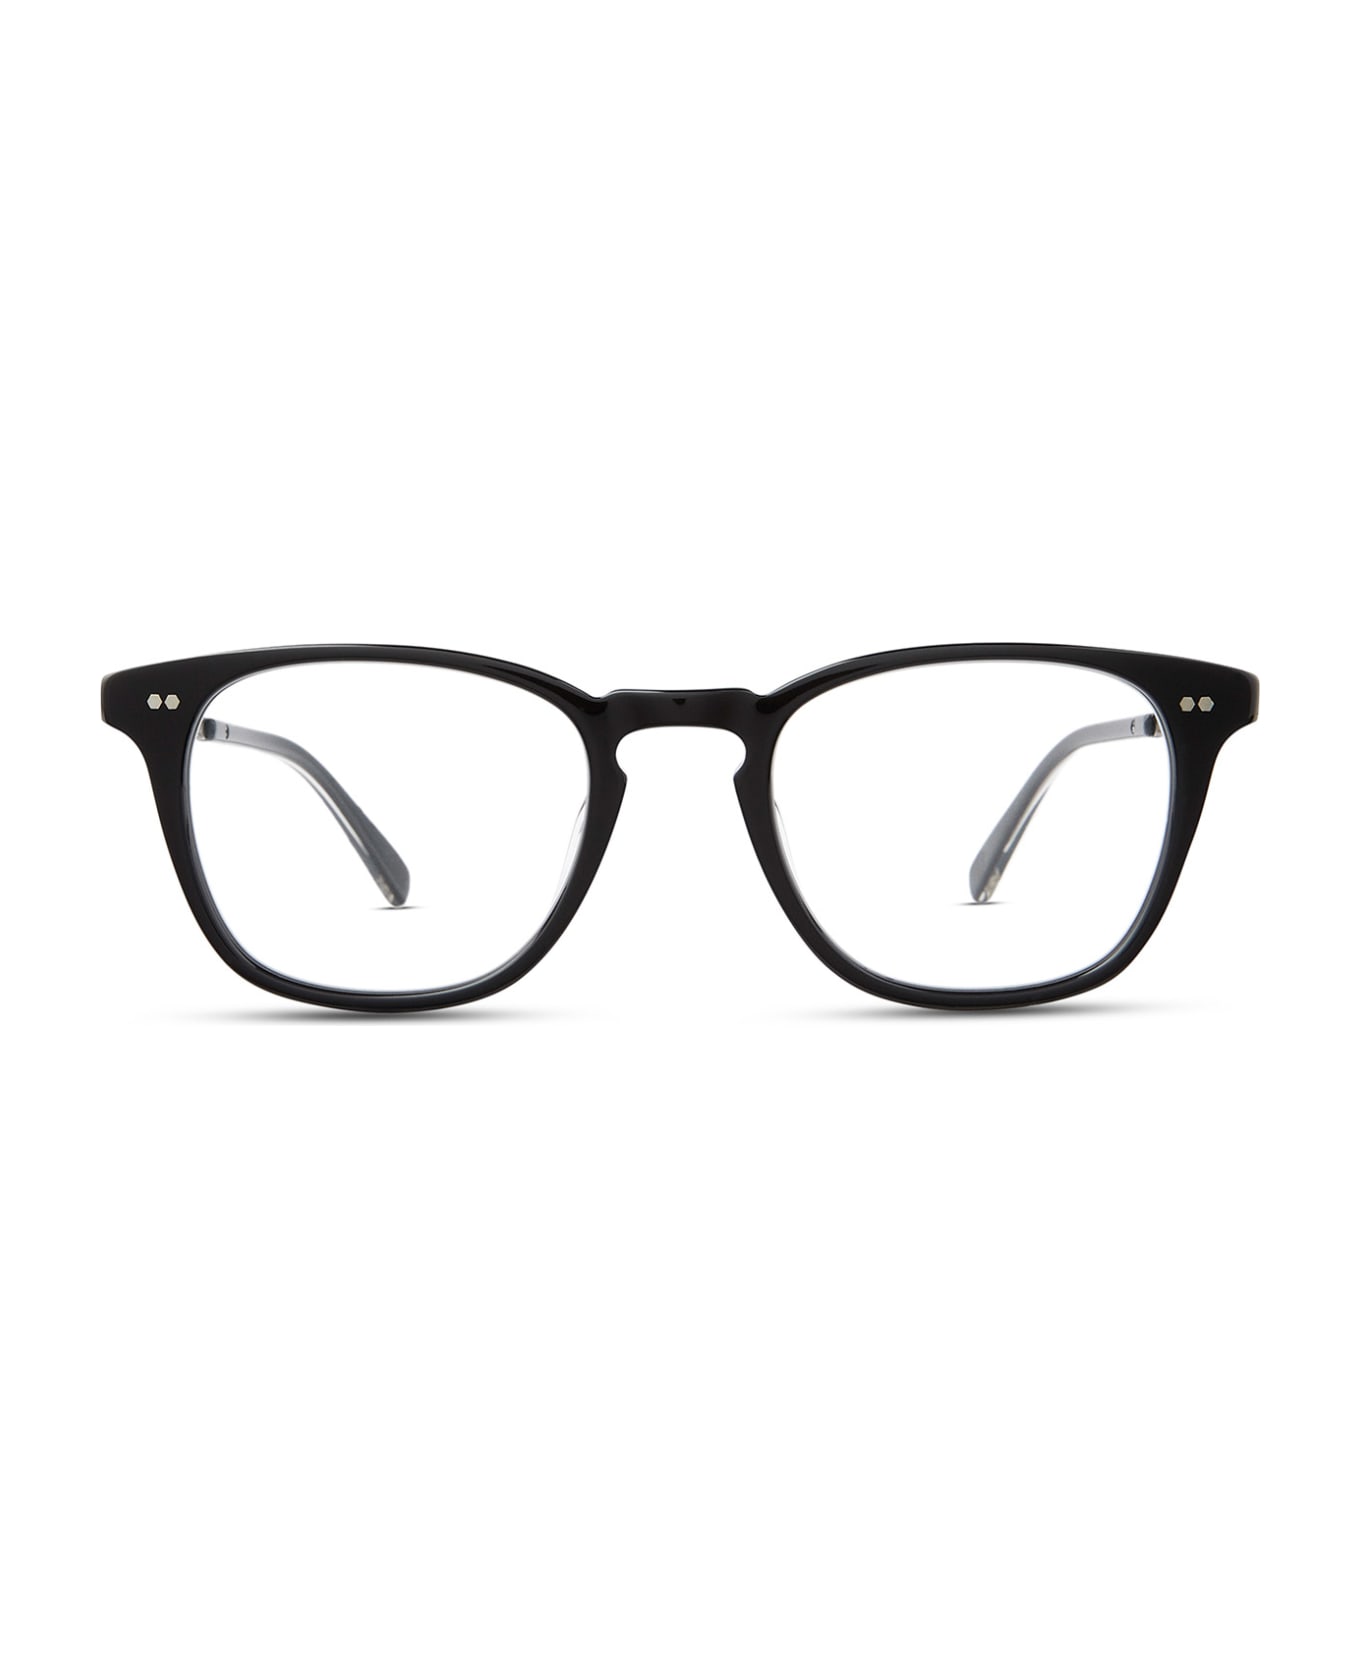 Mr. Leight Kanaloa C Black-gunmetal Glasses - Black-Gunmetal